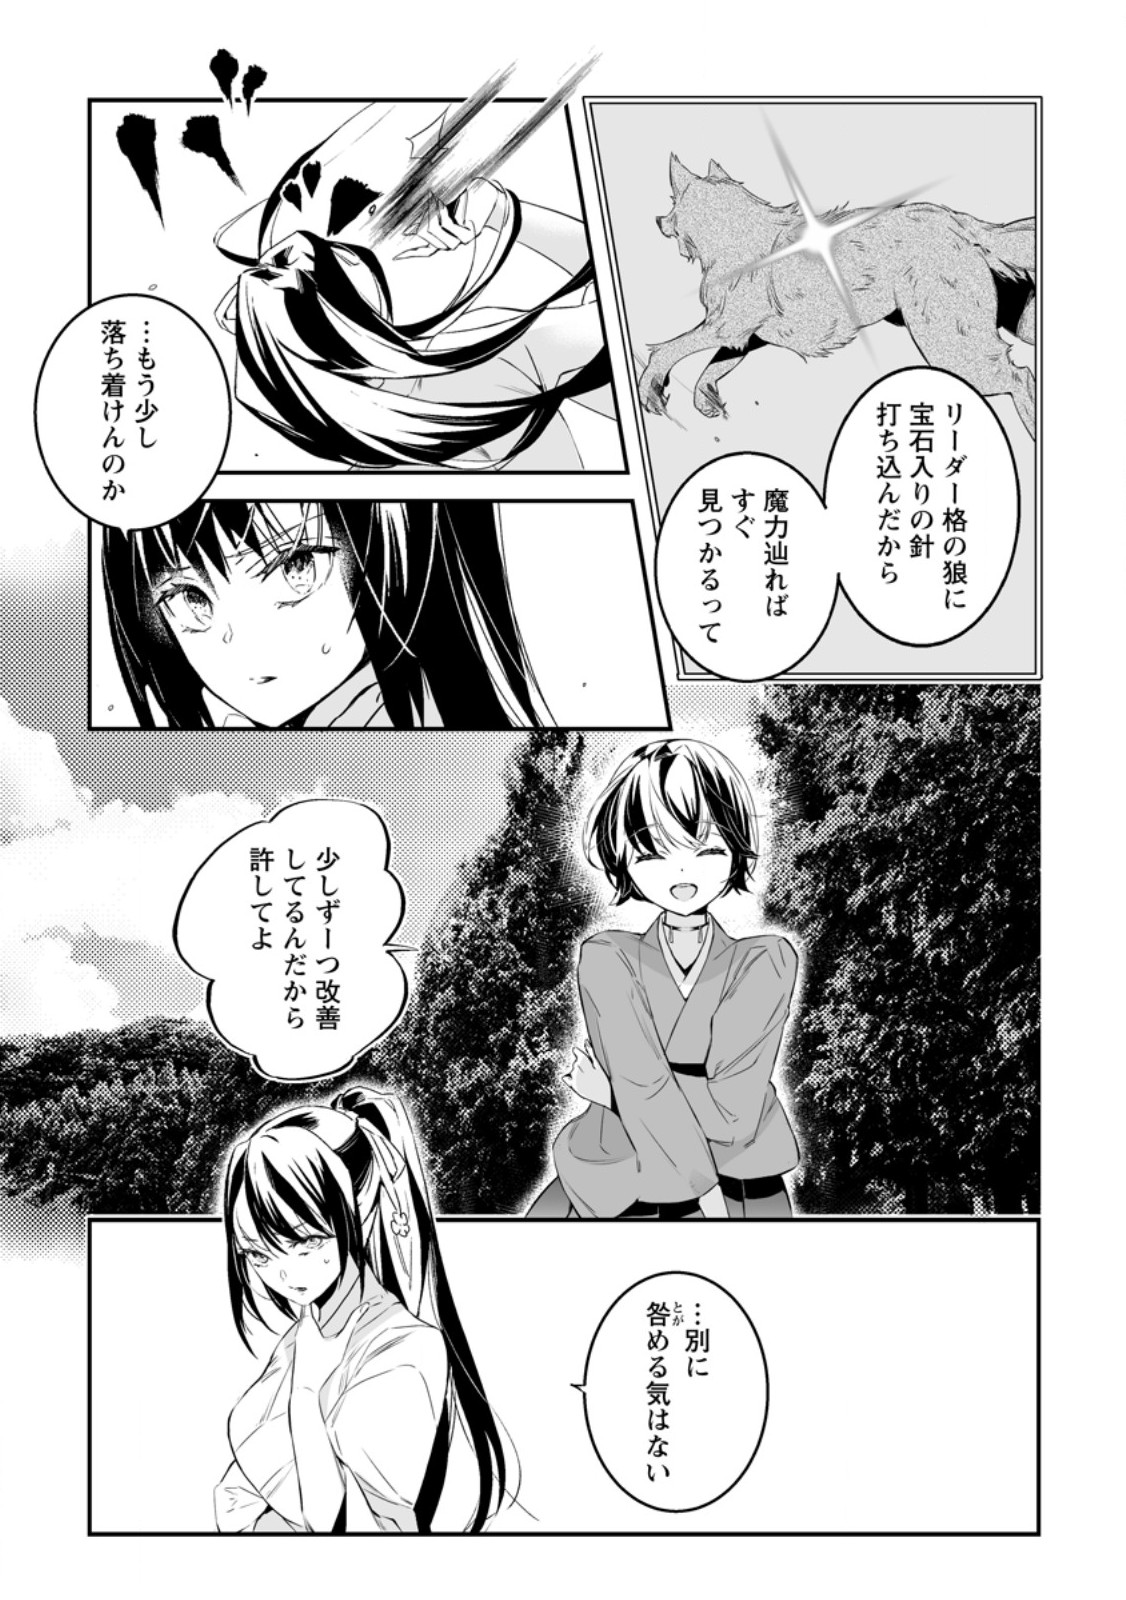 Hakui no Eiyuu - Chapter 32.2 - Page 3